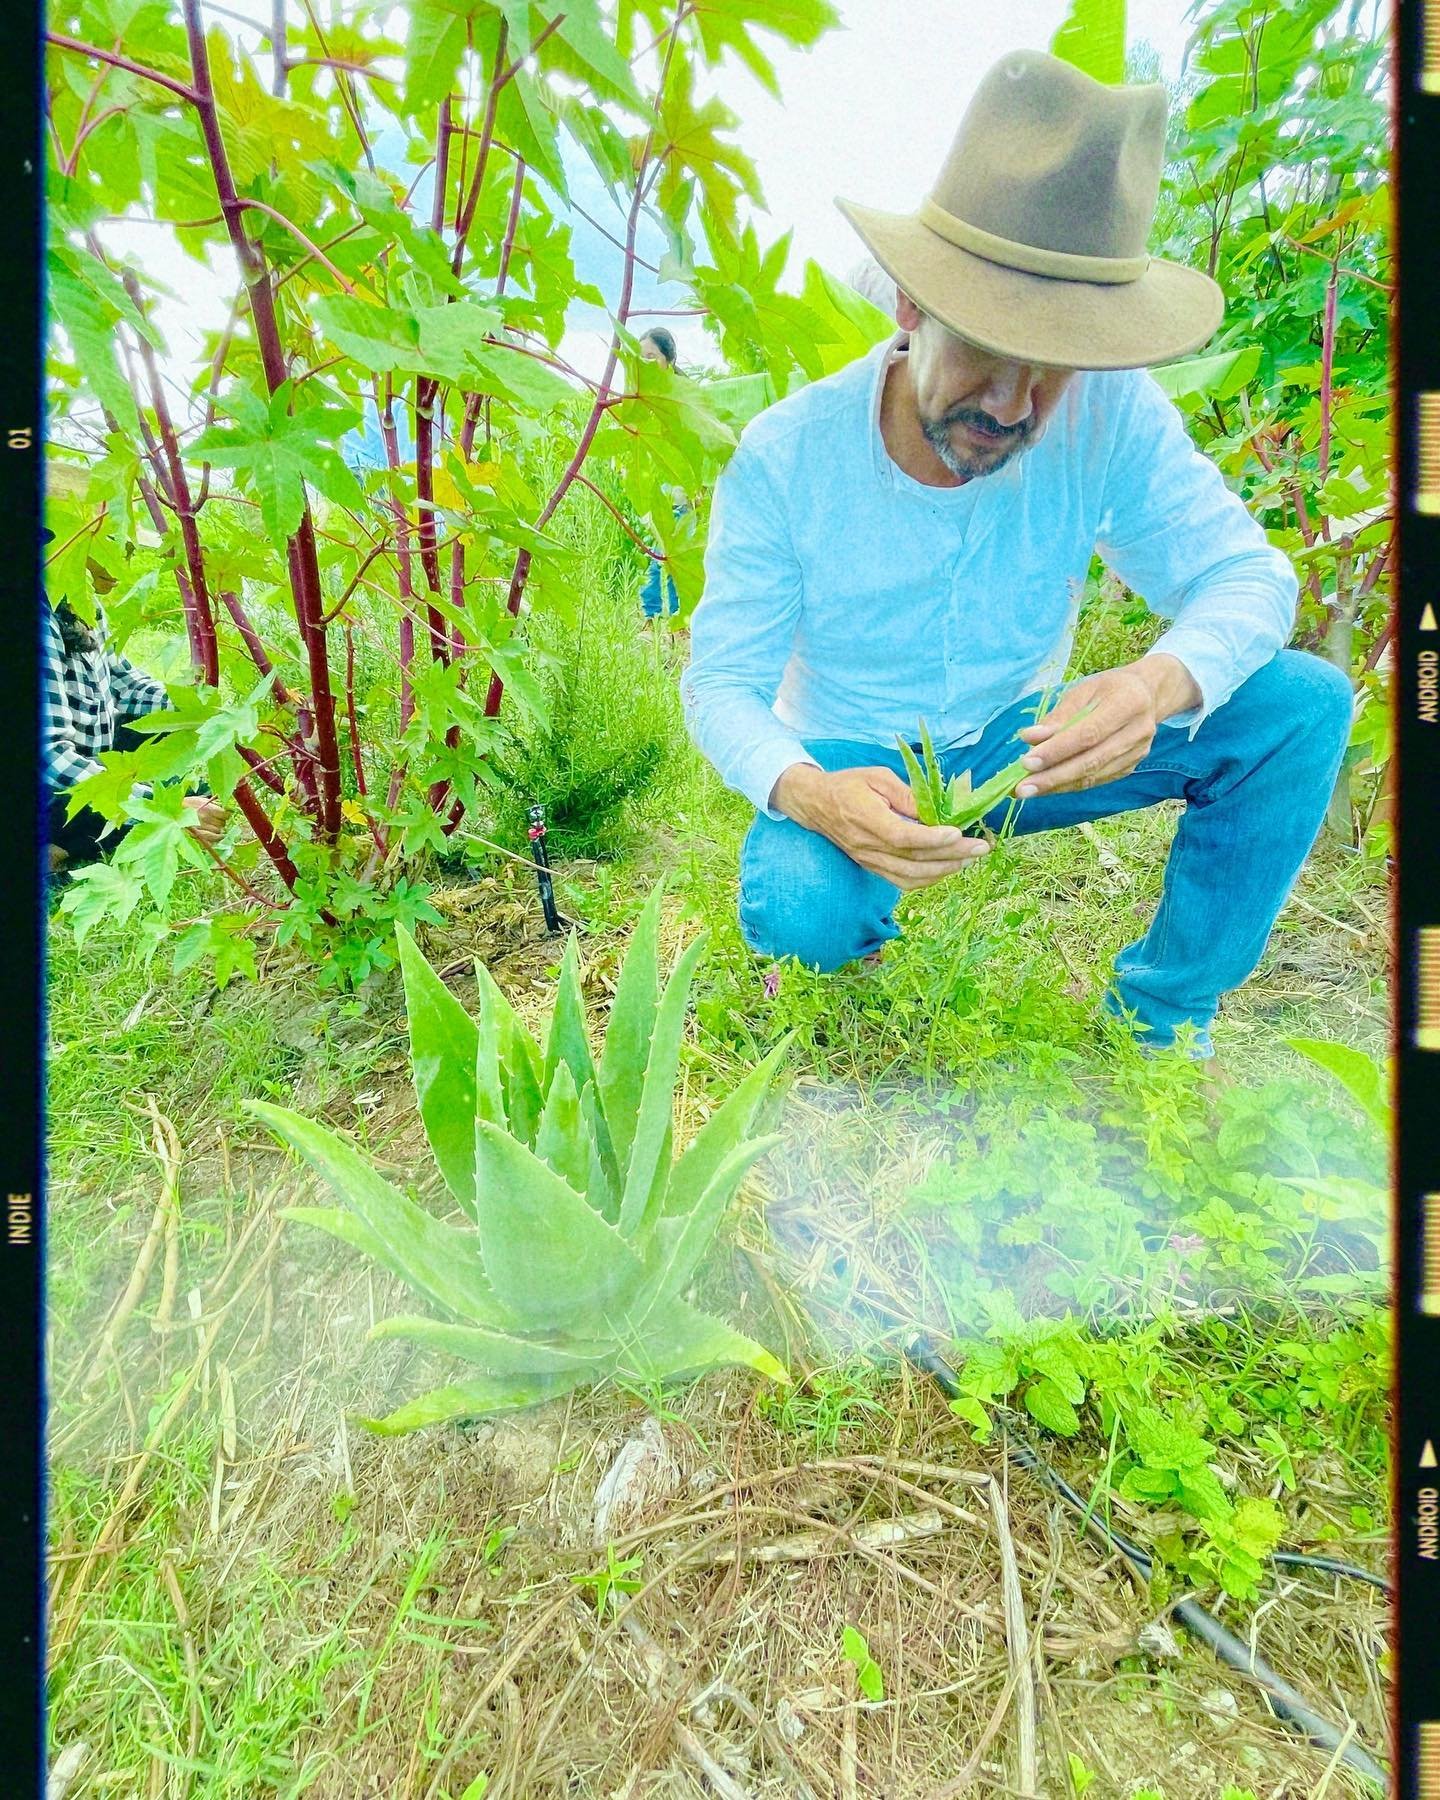 Bendita sea la Tierra que tanto nos da #ElCabron #EarthDay 🌎 

#DiaDeLaTierra #Tierra #Naturaleza #Agave #Mezcal #SaludCabron #VivaLaTierra #Agricultura #Sintropia #Vida #Syntropy #PlanetEarth #Planeta #Nature #Regeneration #Mexico #Oaxaca #ProjectC